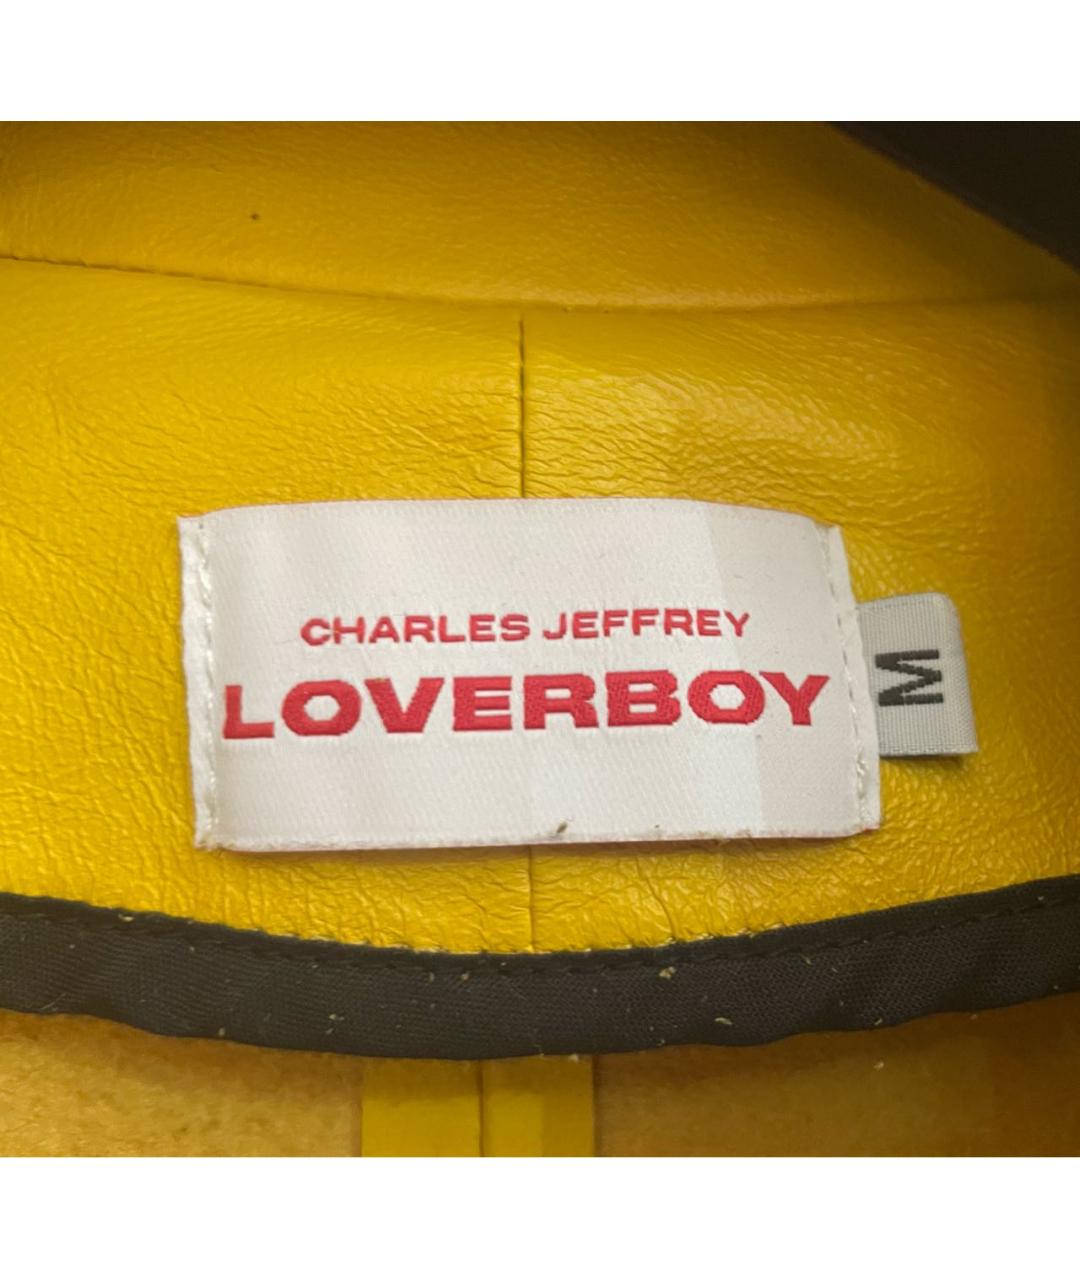 CHARLES JEFFREY LOVERBOY Желтый кожаный тренч / плащ, фото 3